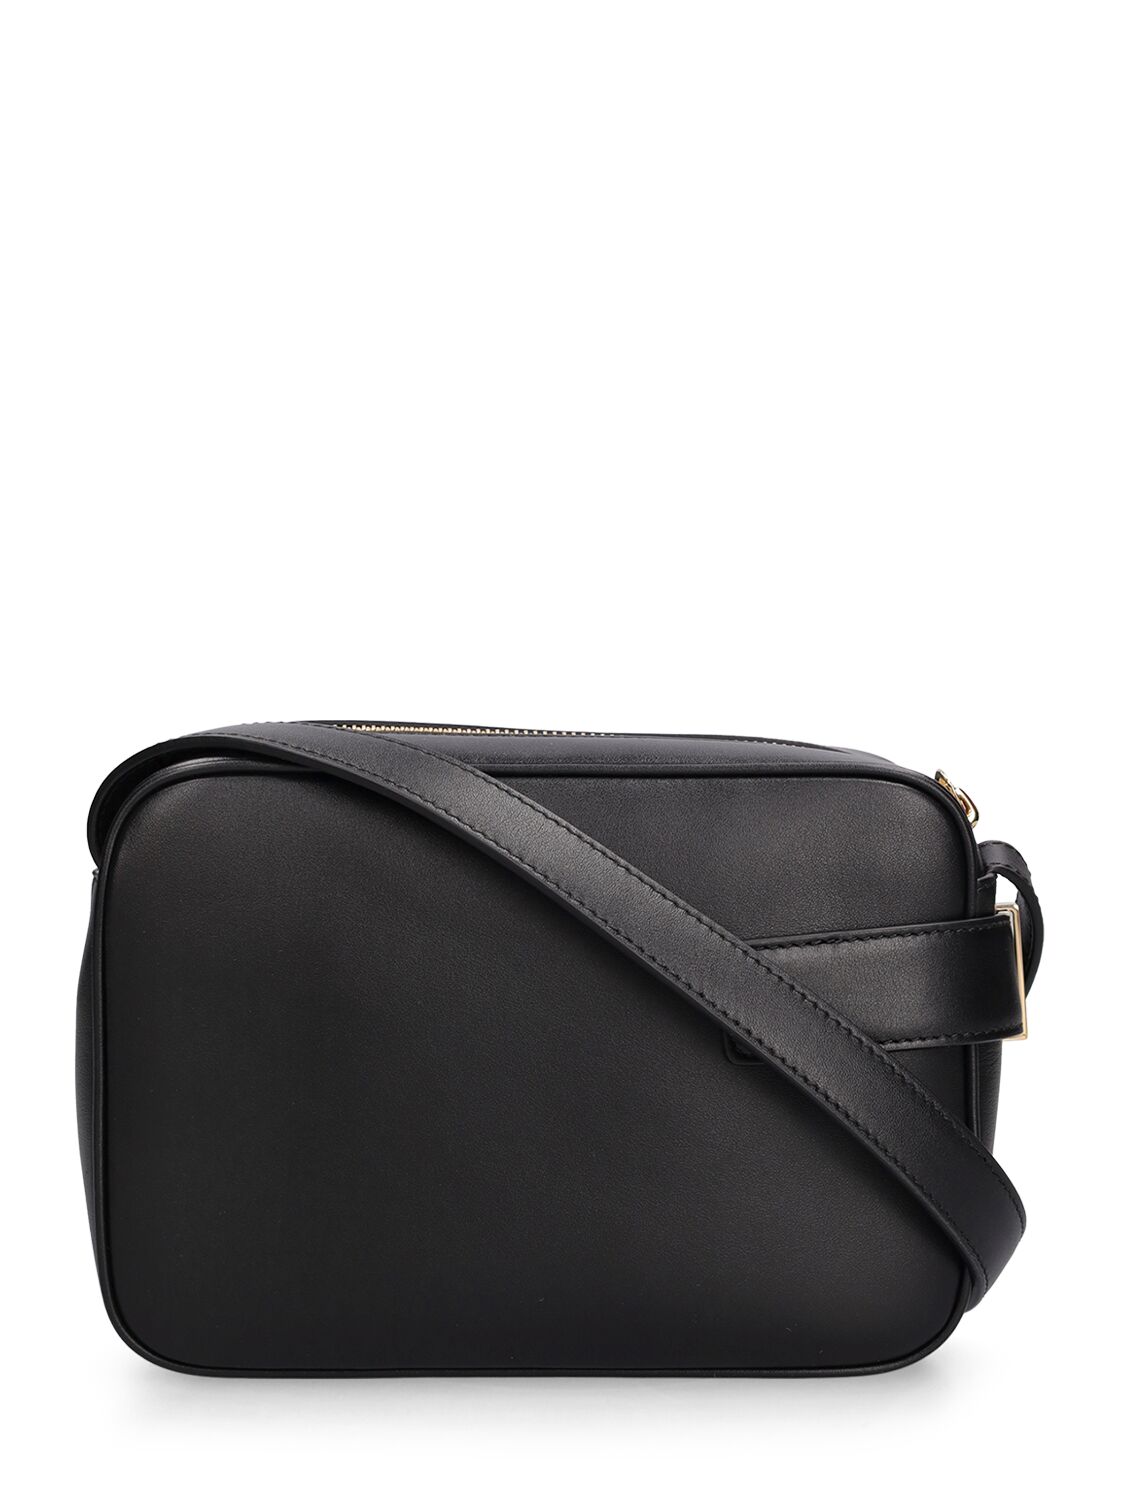 Shop Ferragamo Archive Cc Leather Shoulder Bag In Black